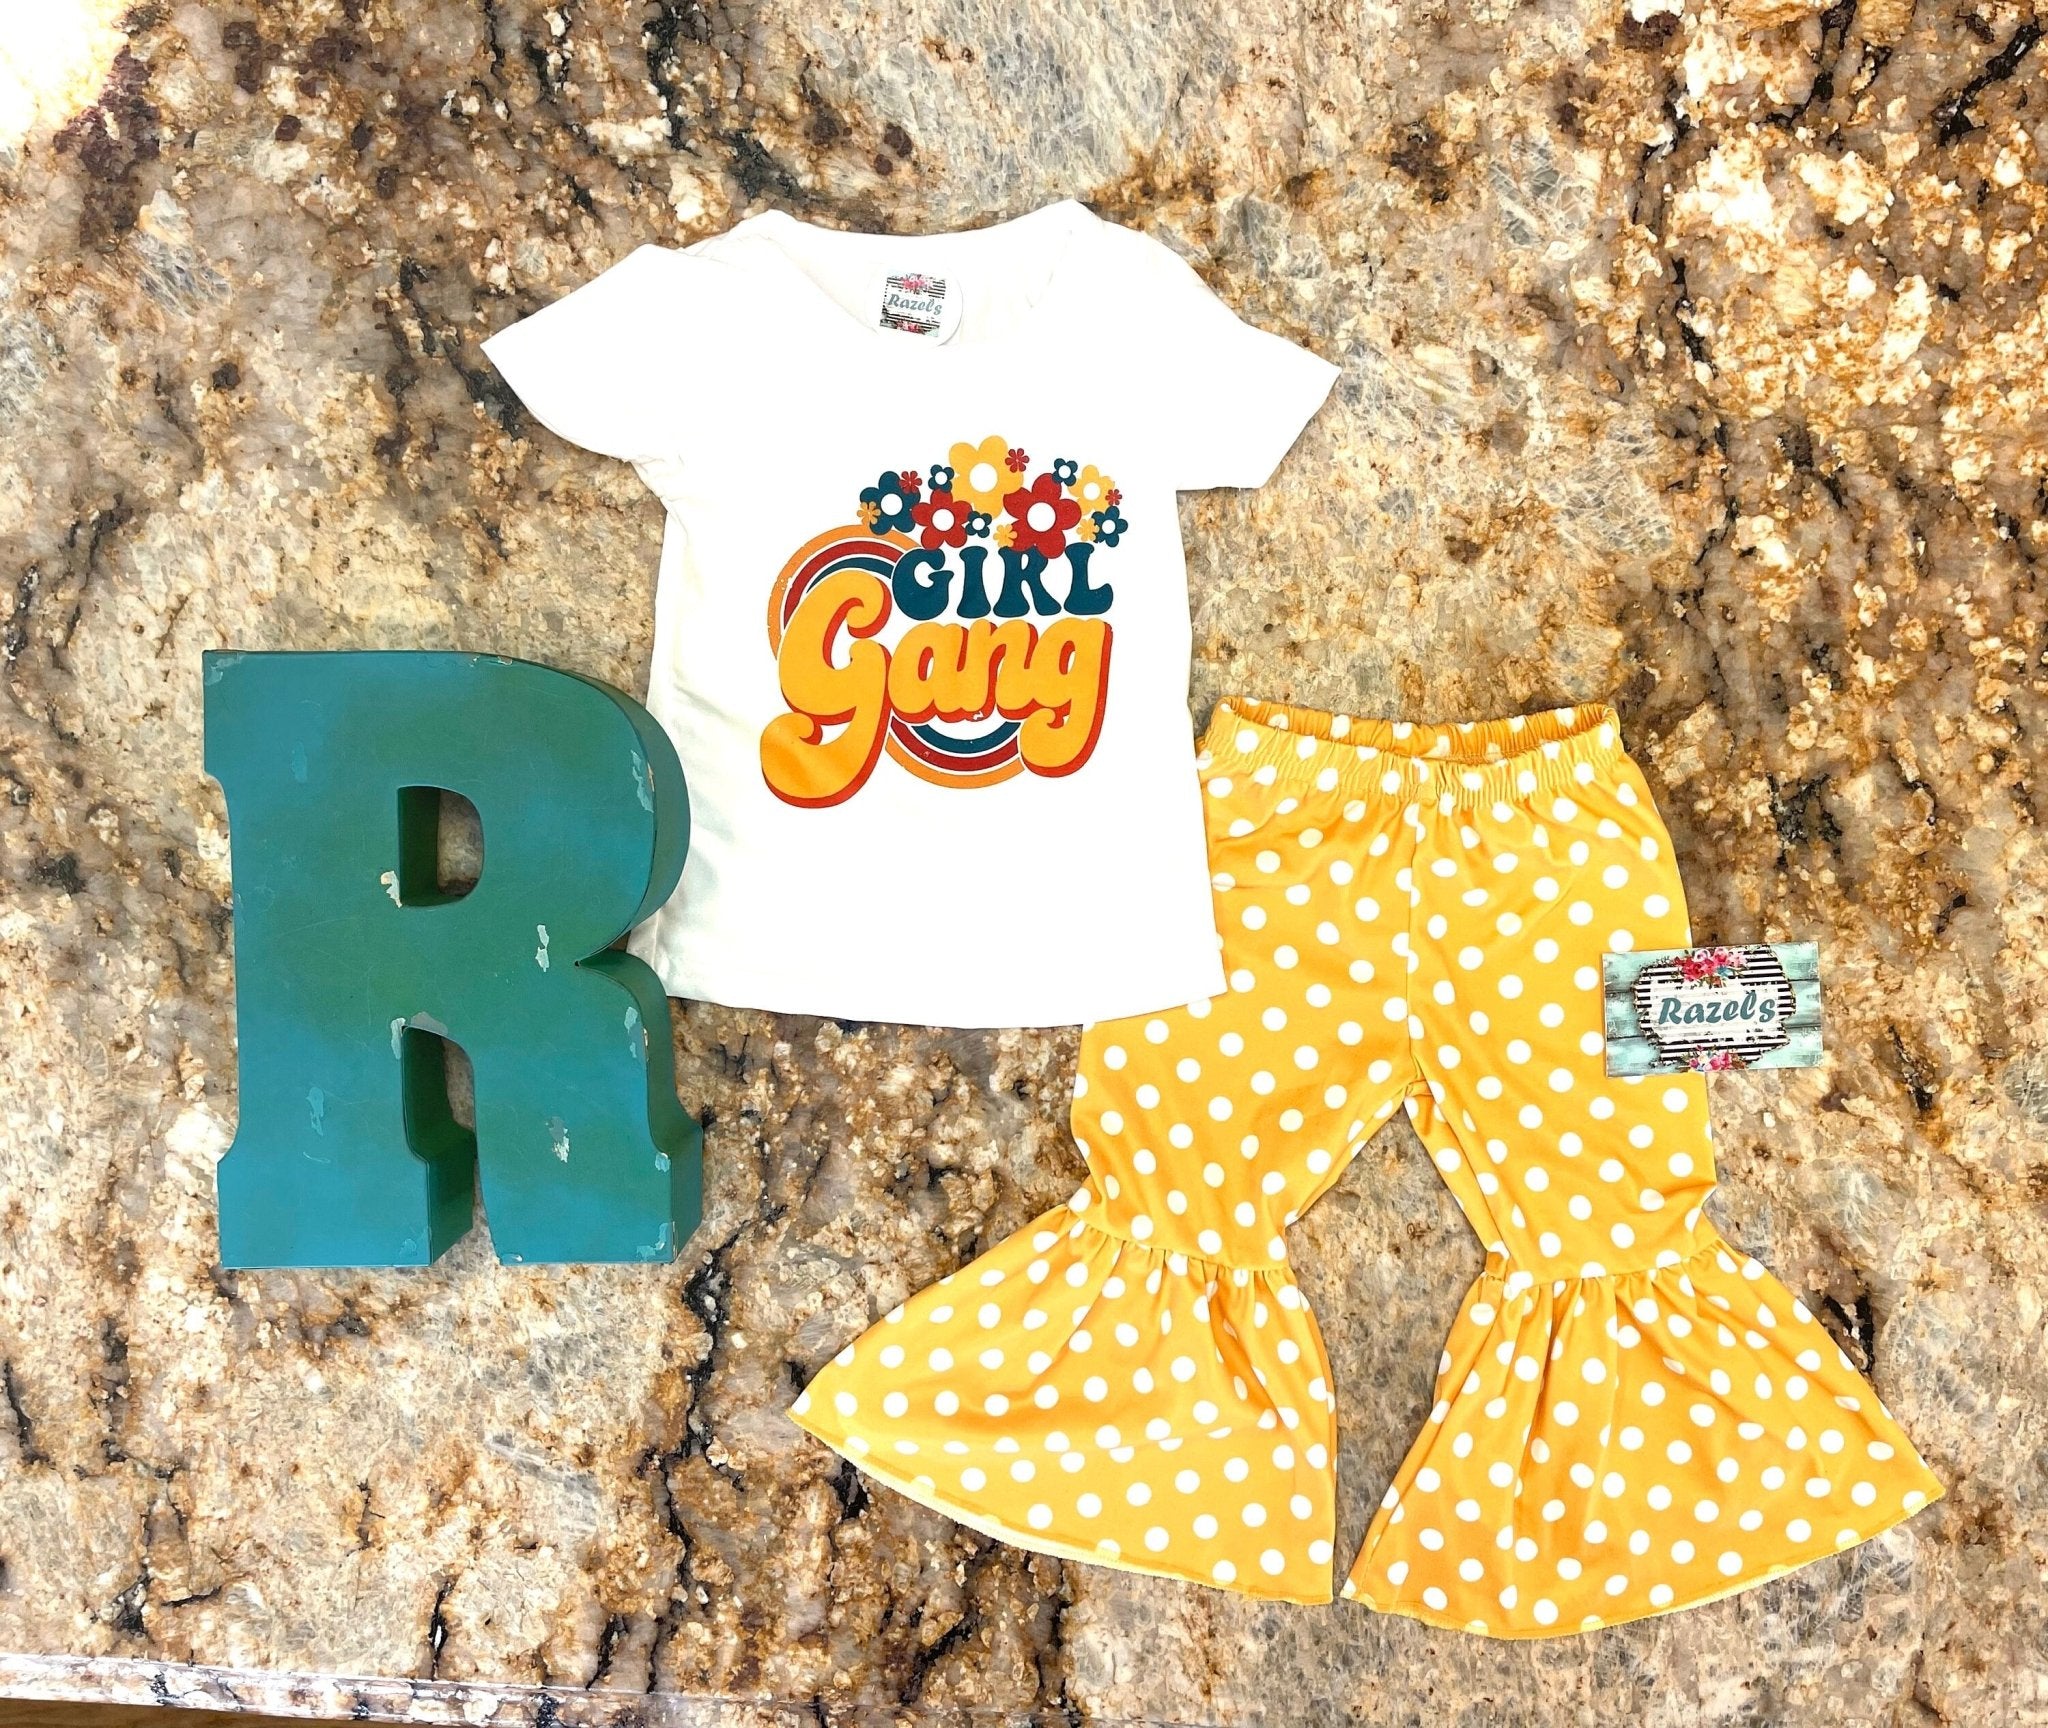 Spring Girl Gang T-shirt, Yellow Polka Dot Bell Bottoms - Razels